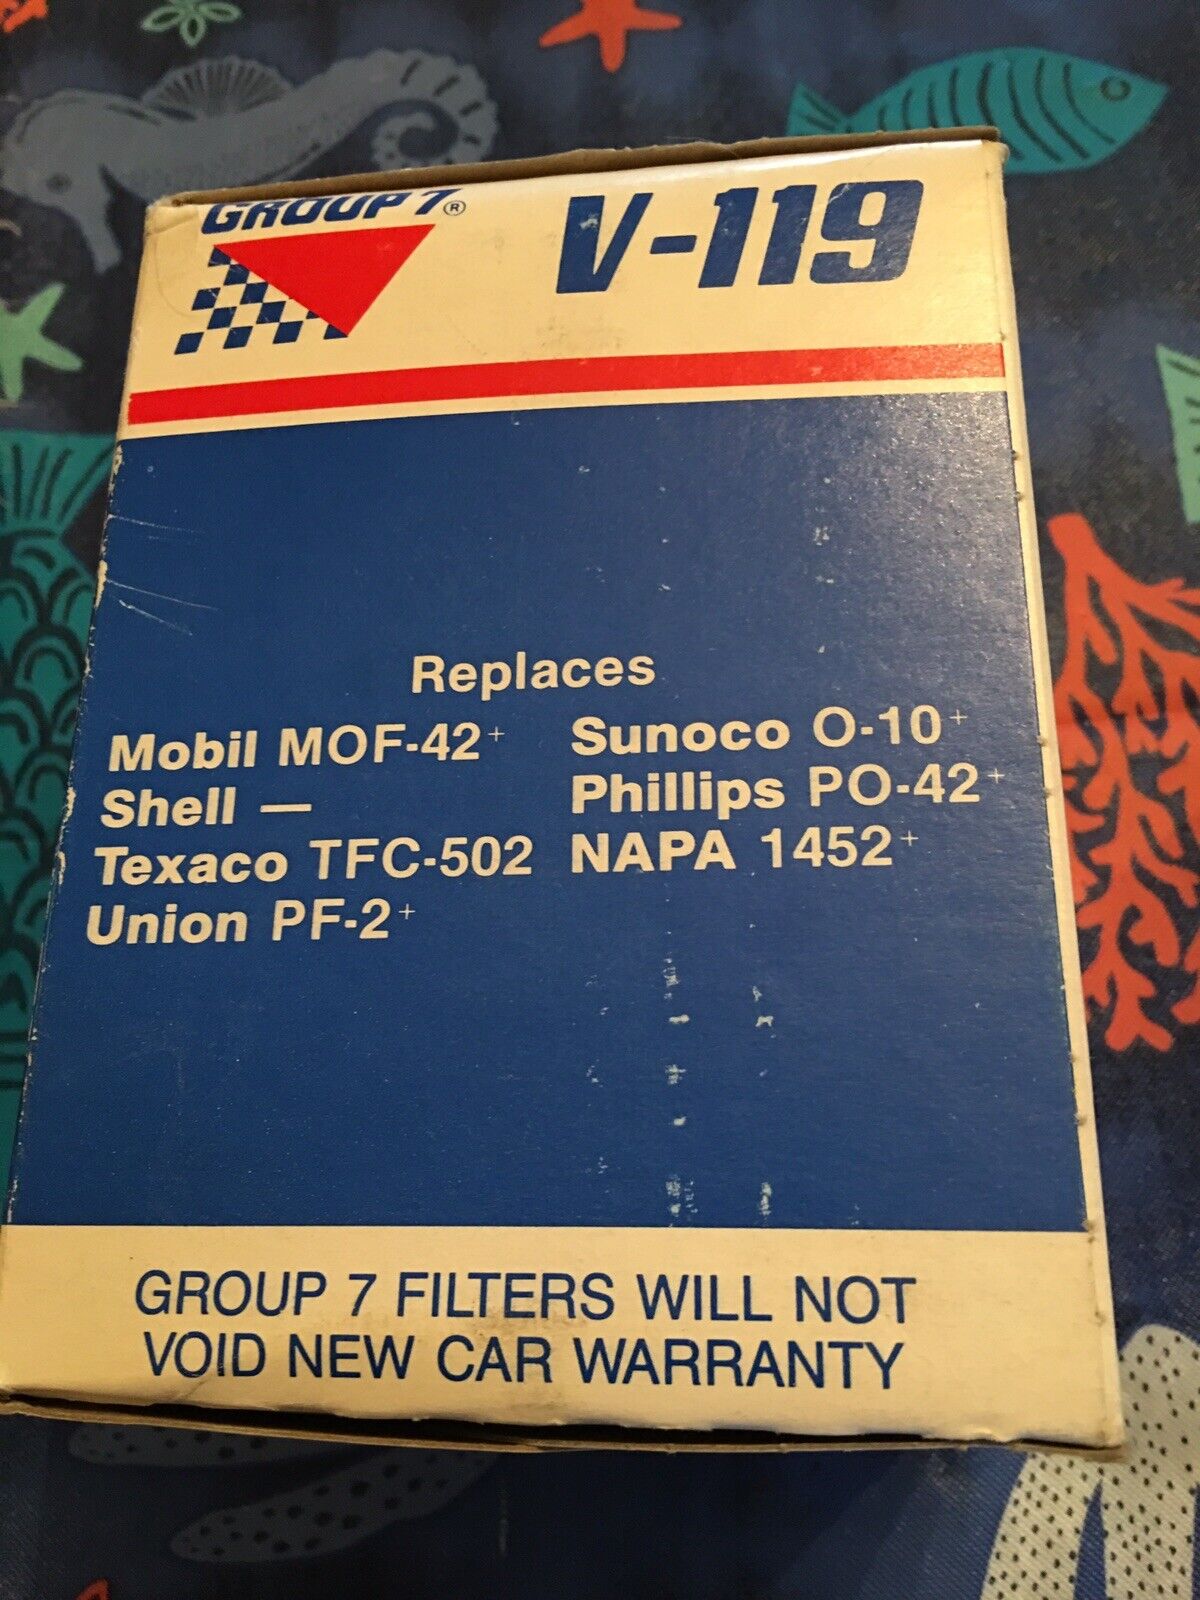 Qty 4 Oil Filter V-119 Condition is New 240z & 260z 1970-74280z & 280zx 1975-79